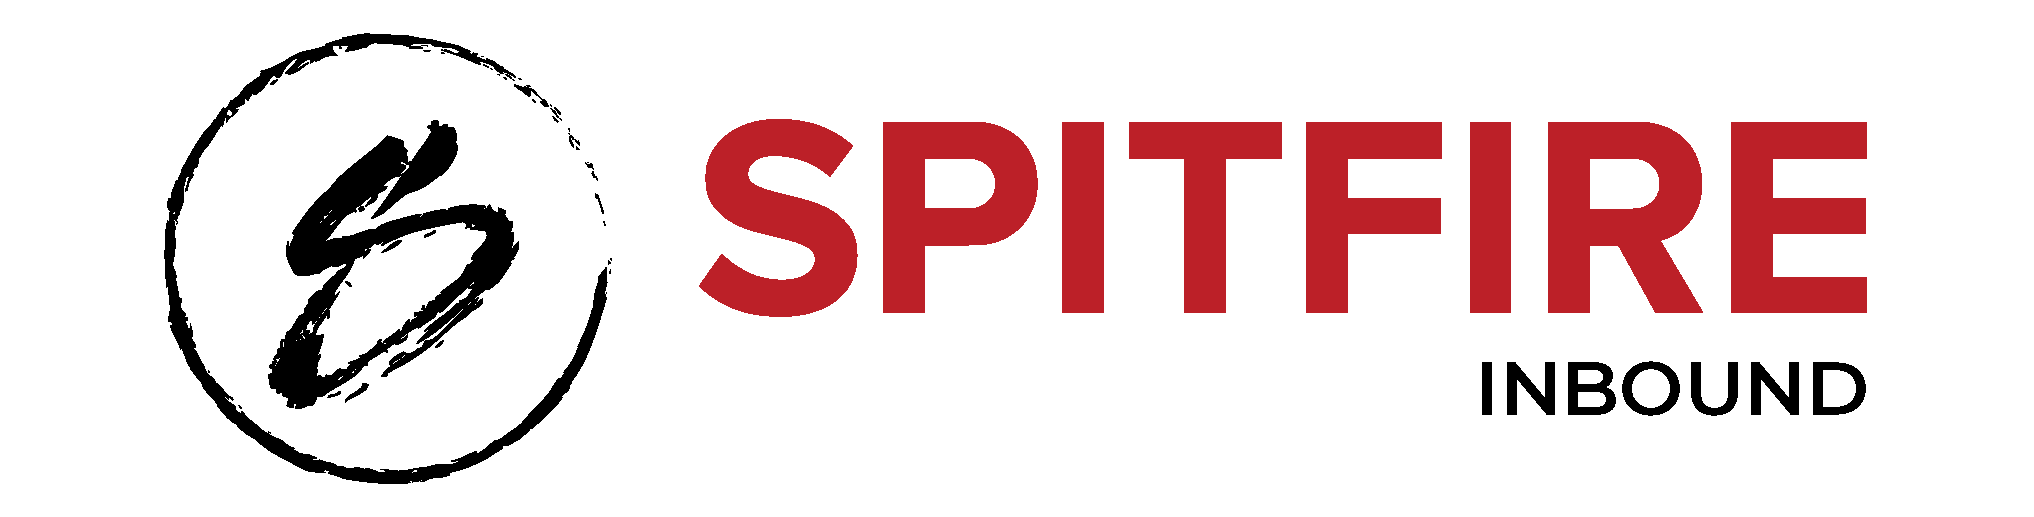 New Spitfire inbound logos_Artboard 2